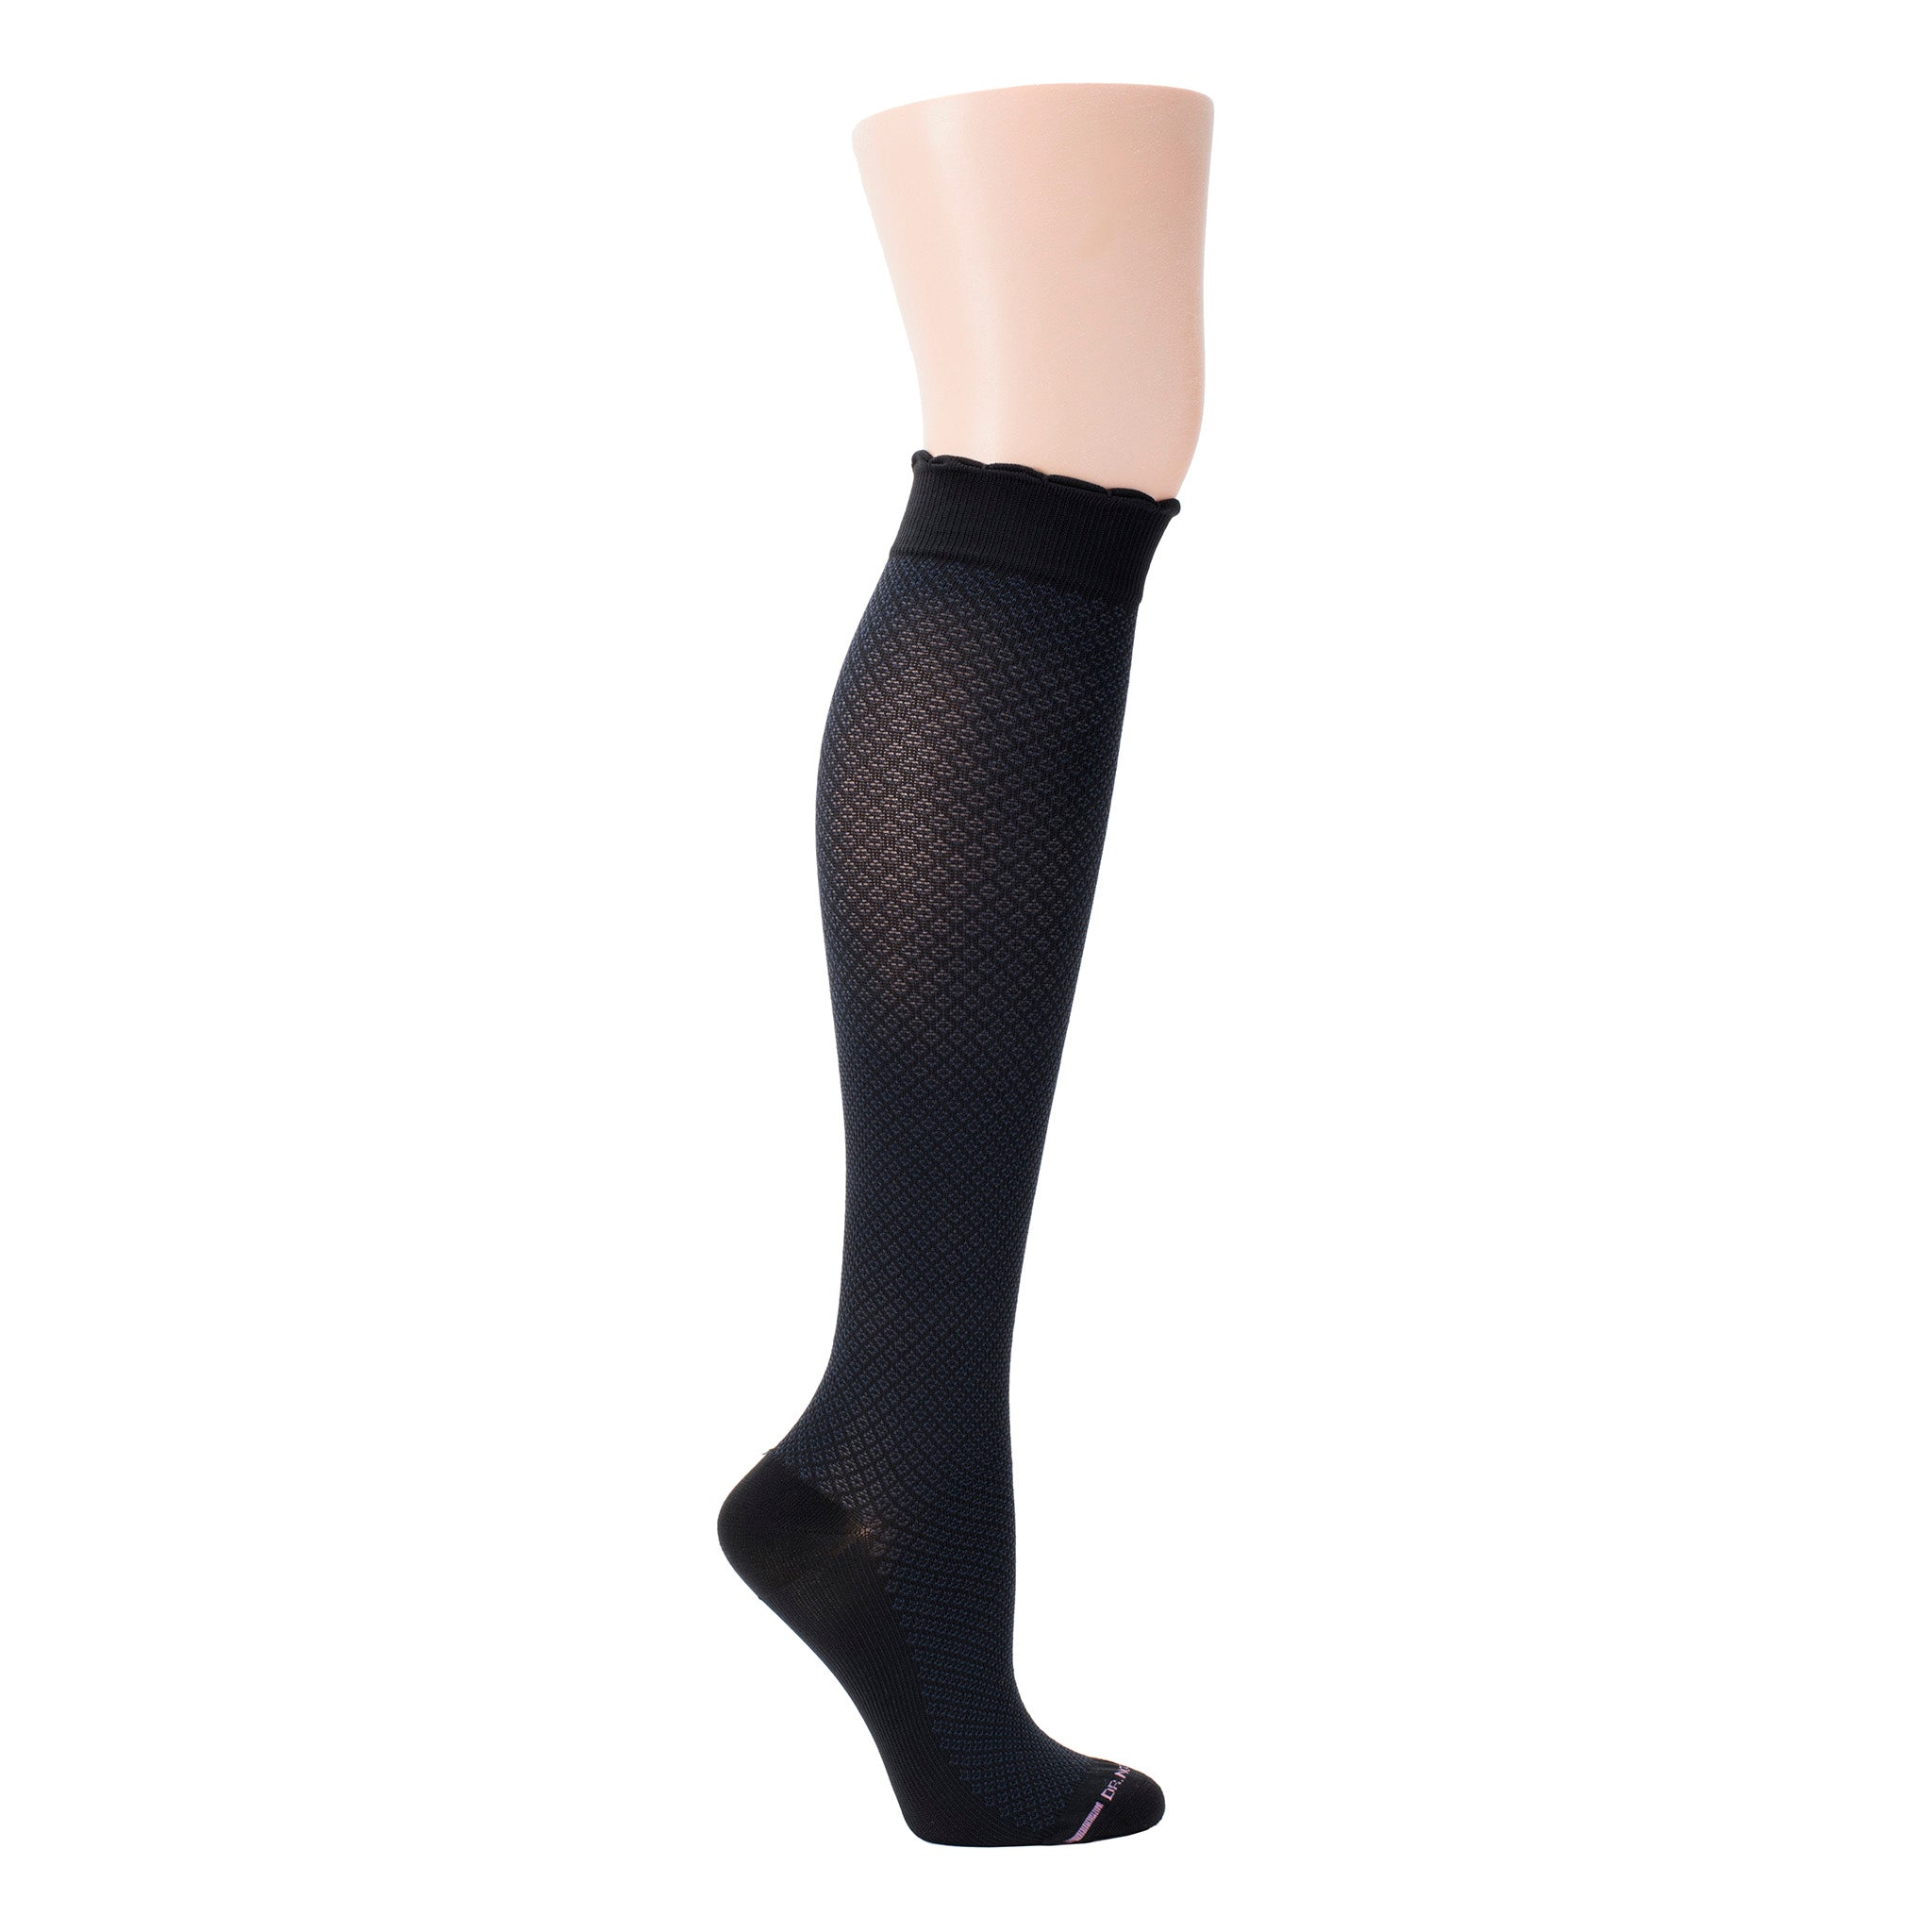  THERAFIRMLIGHT Women's Knee High Support Stockings